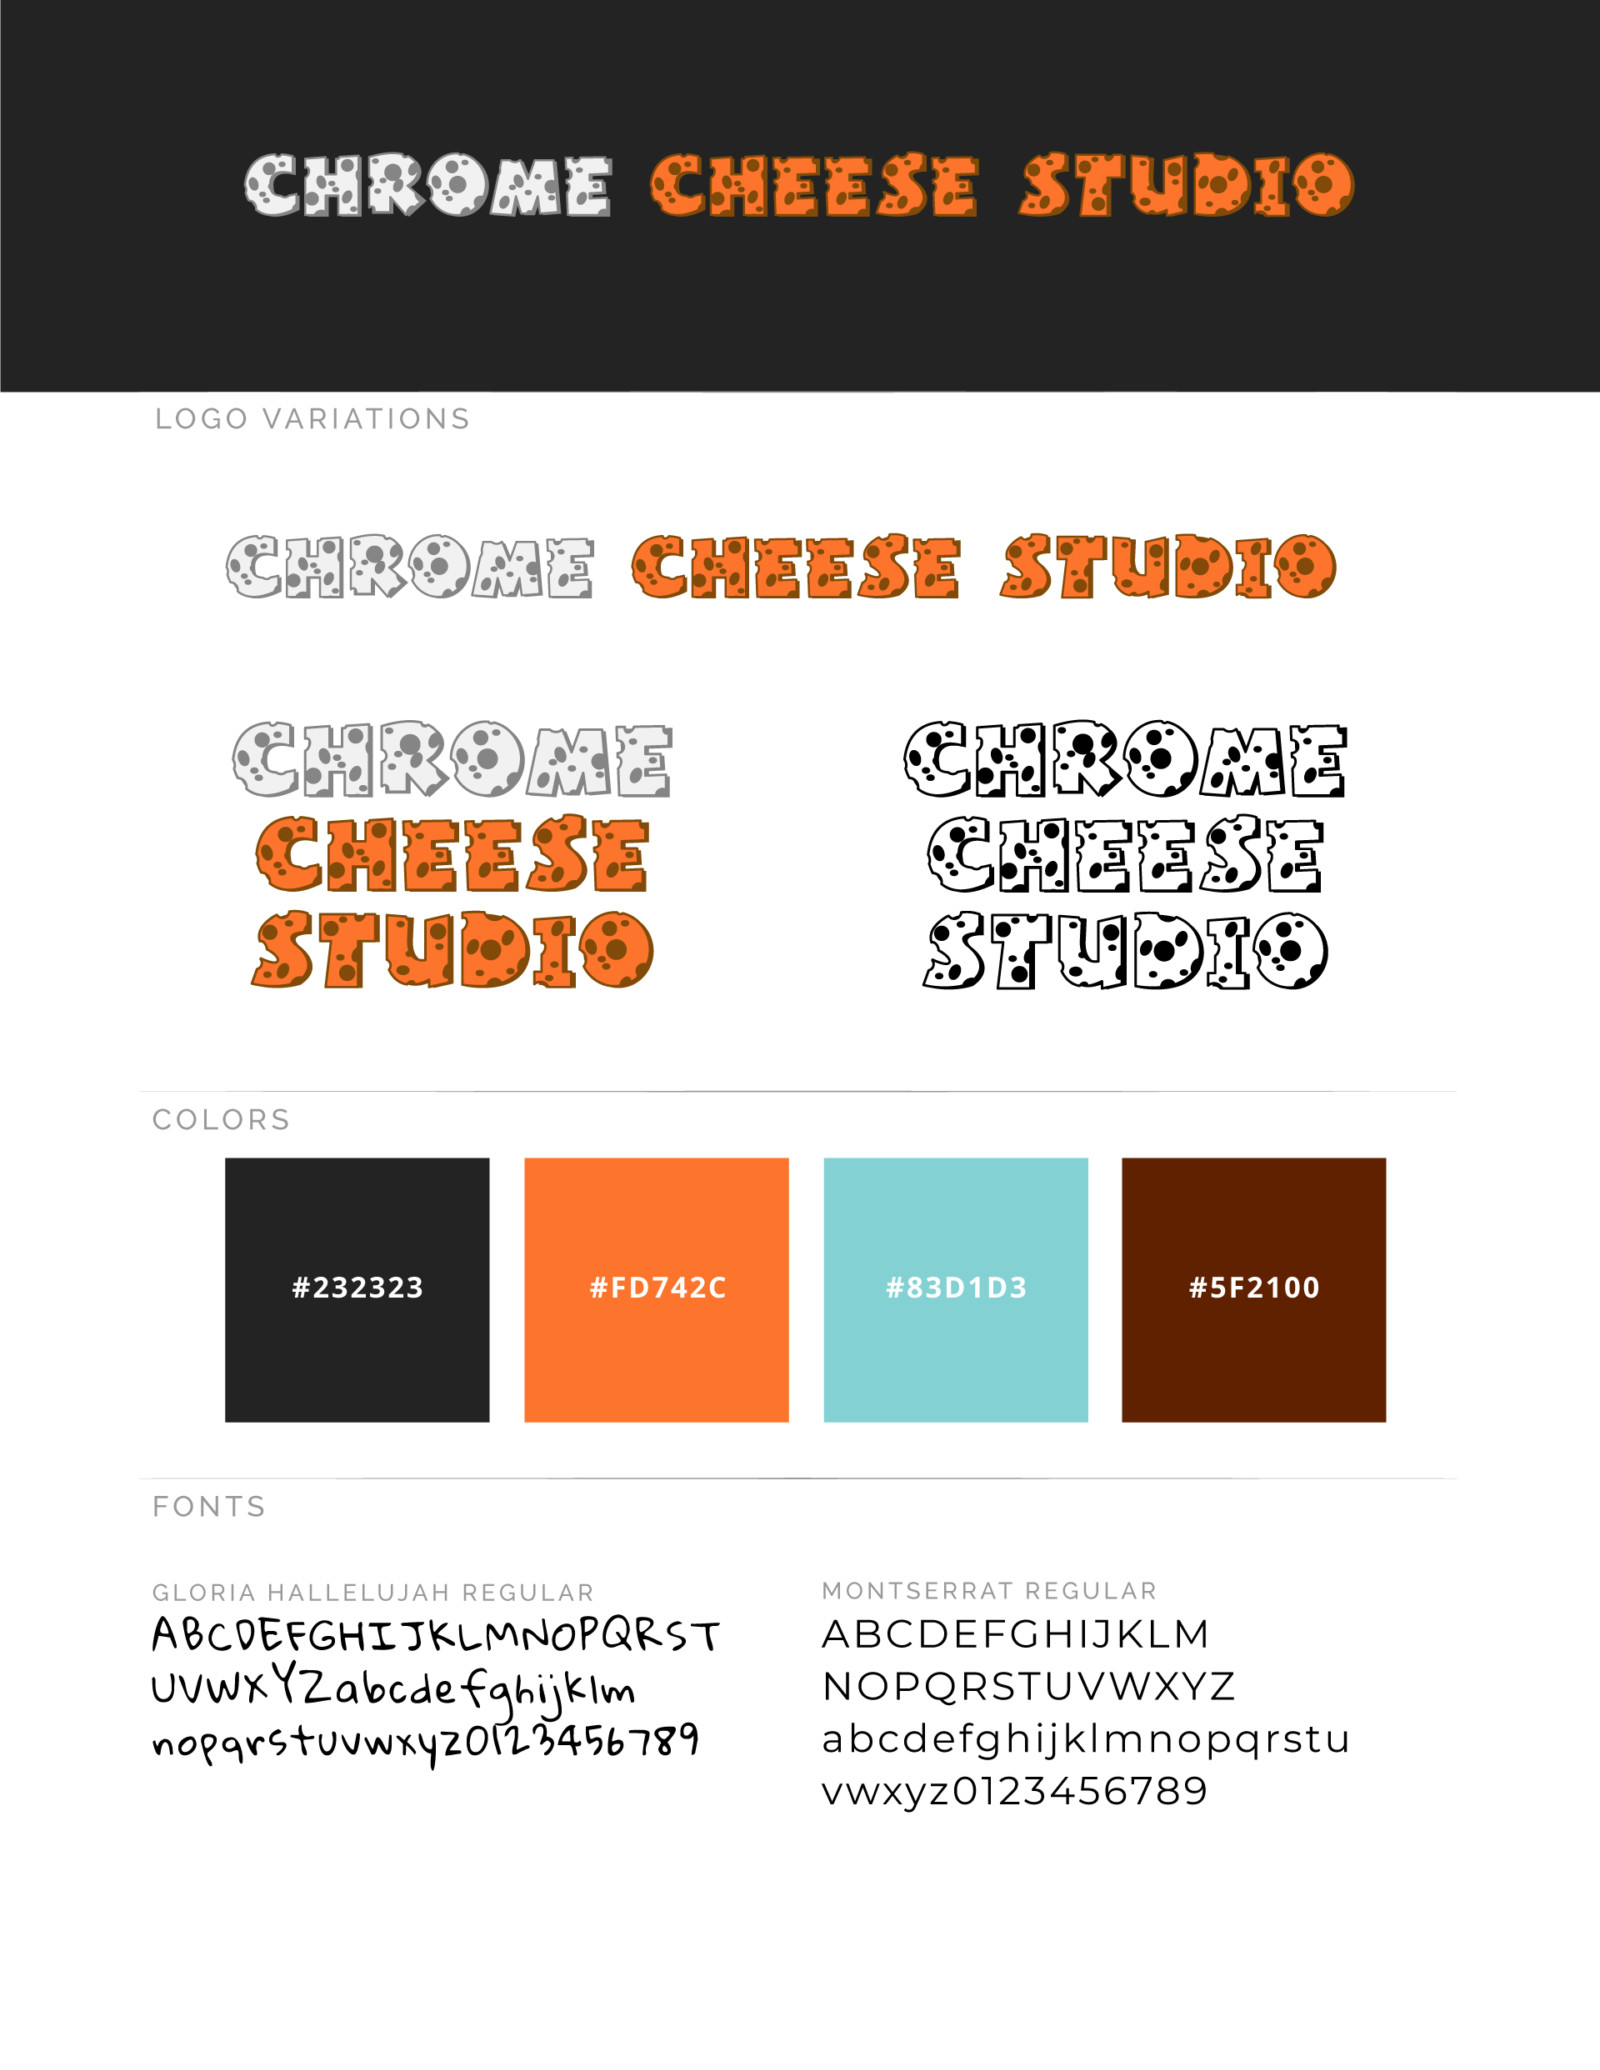 Chrome Cheese Studio Brand Guide